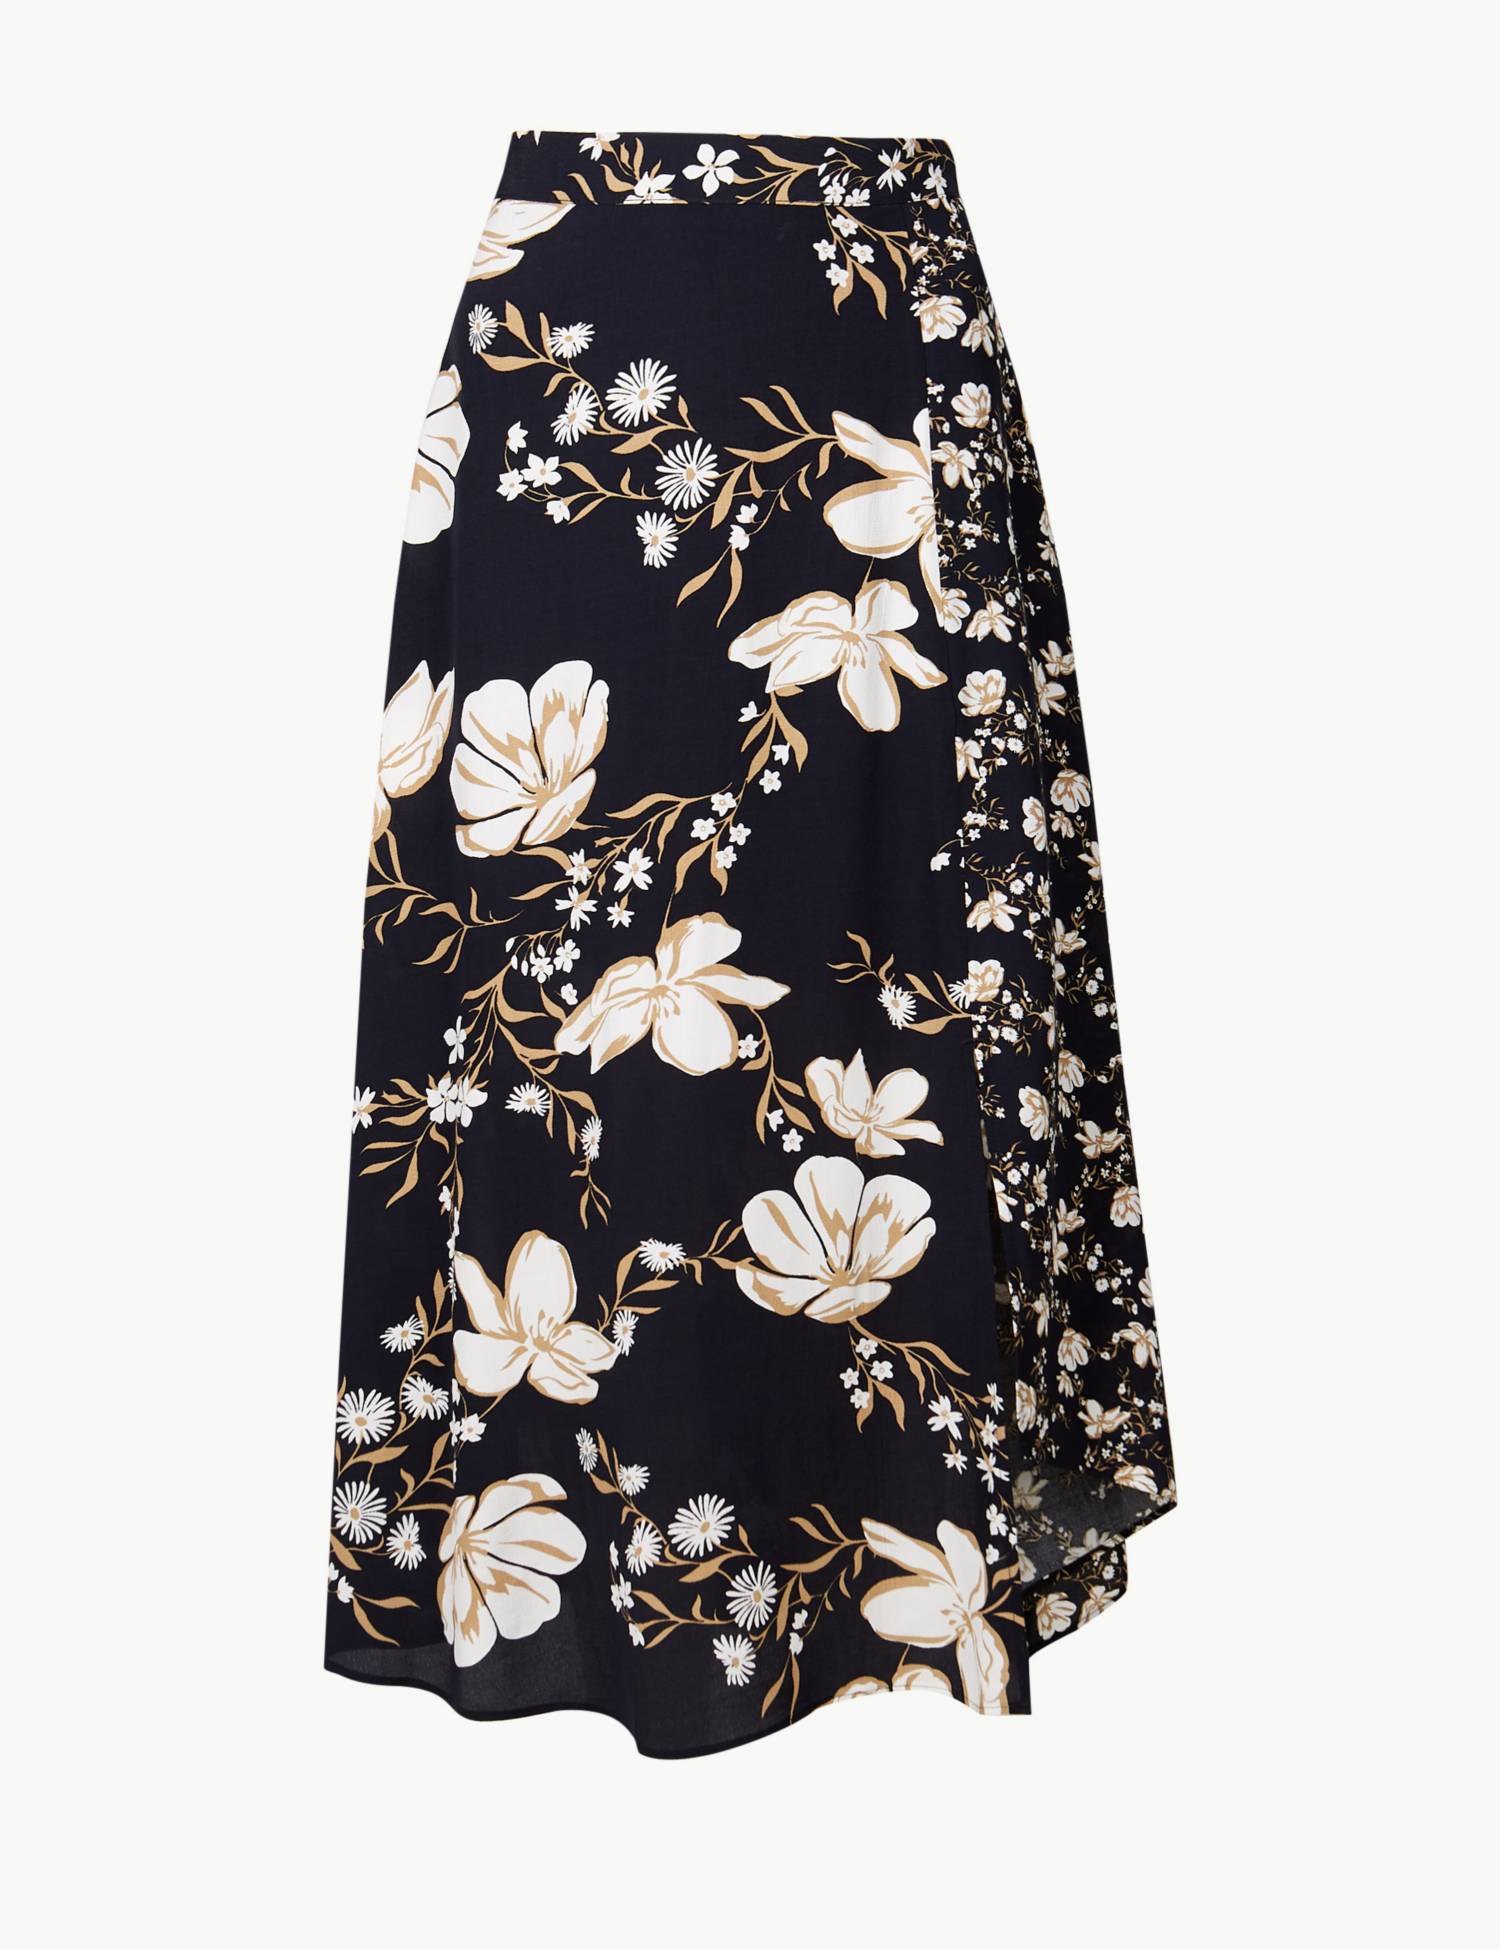 M&S Floral Print Asymmetric Skirt